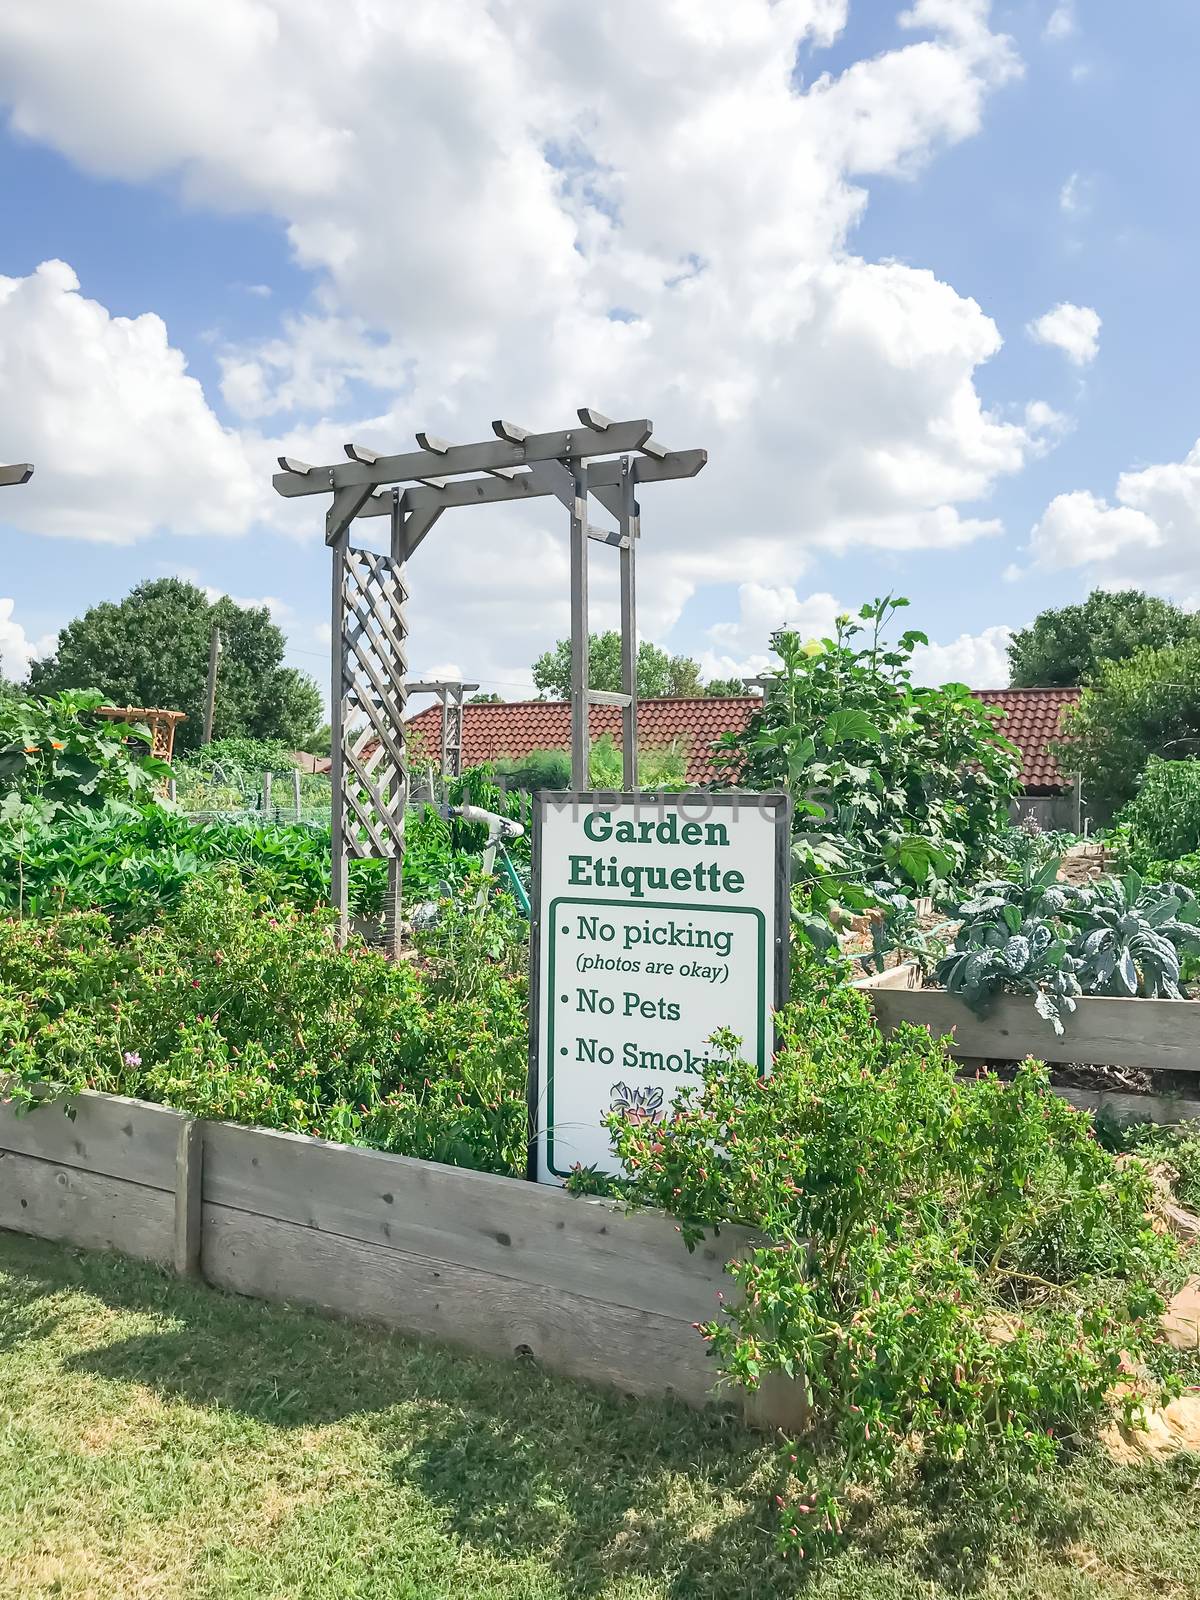 Urban growing community garden with green mature crops near Dallas, Texas by trongnguyen